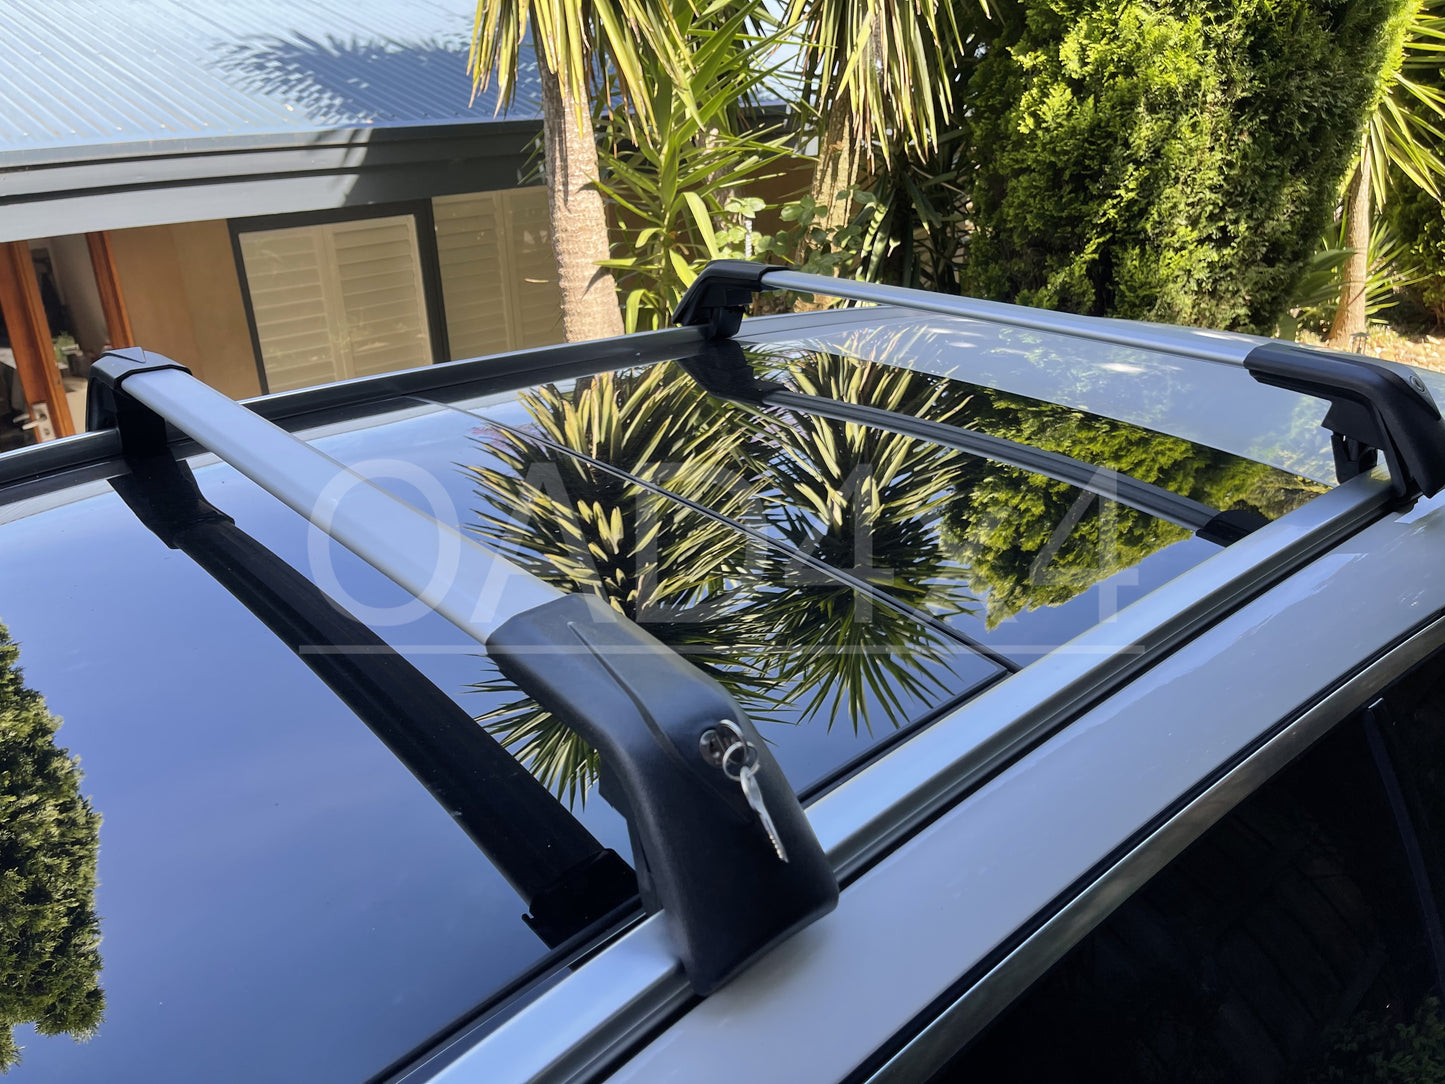 1 Pair Aluminum Silver Cross Bar Roof Racks Baggage Holder for Volvo XC90 T6 2014+ Clamp in Flush Rail